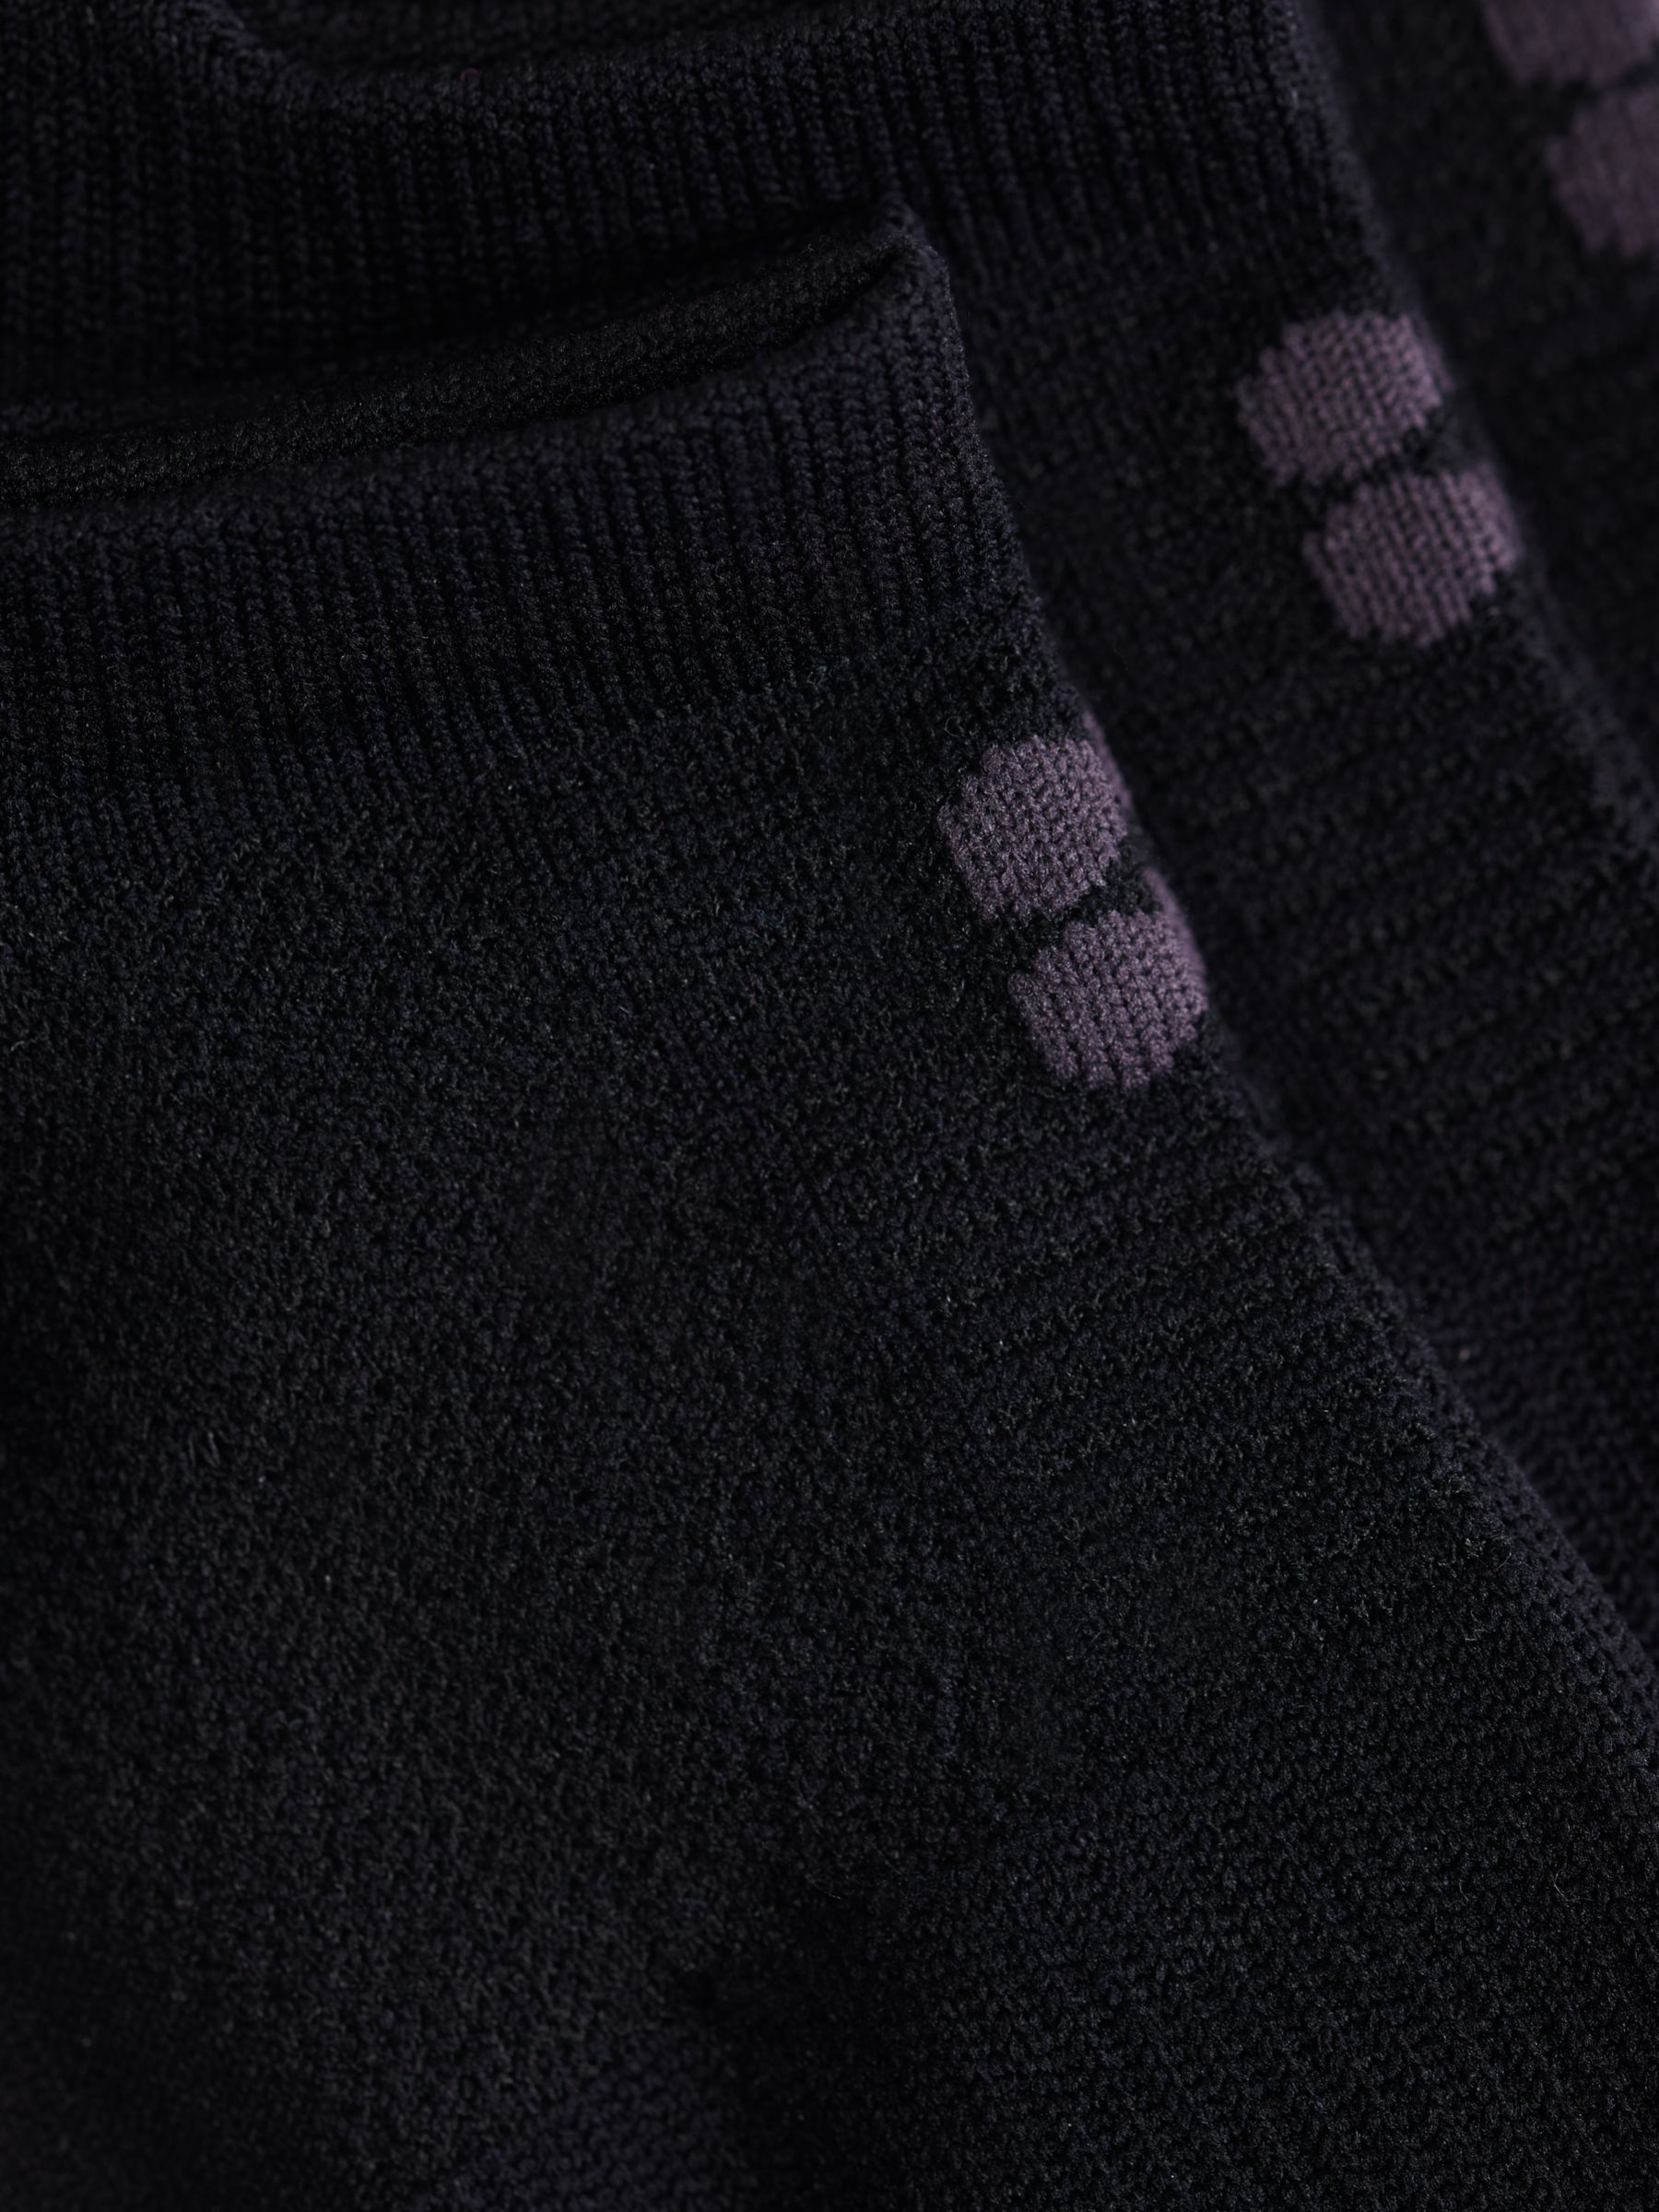 Buy Sweaty Betty Plain Lightweight Trainer Socks, Pack of 3 Online at johnlewis.com